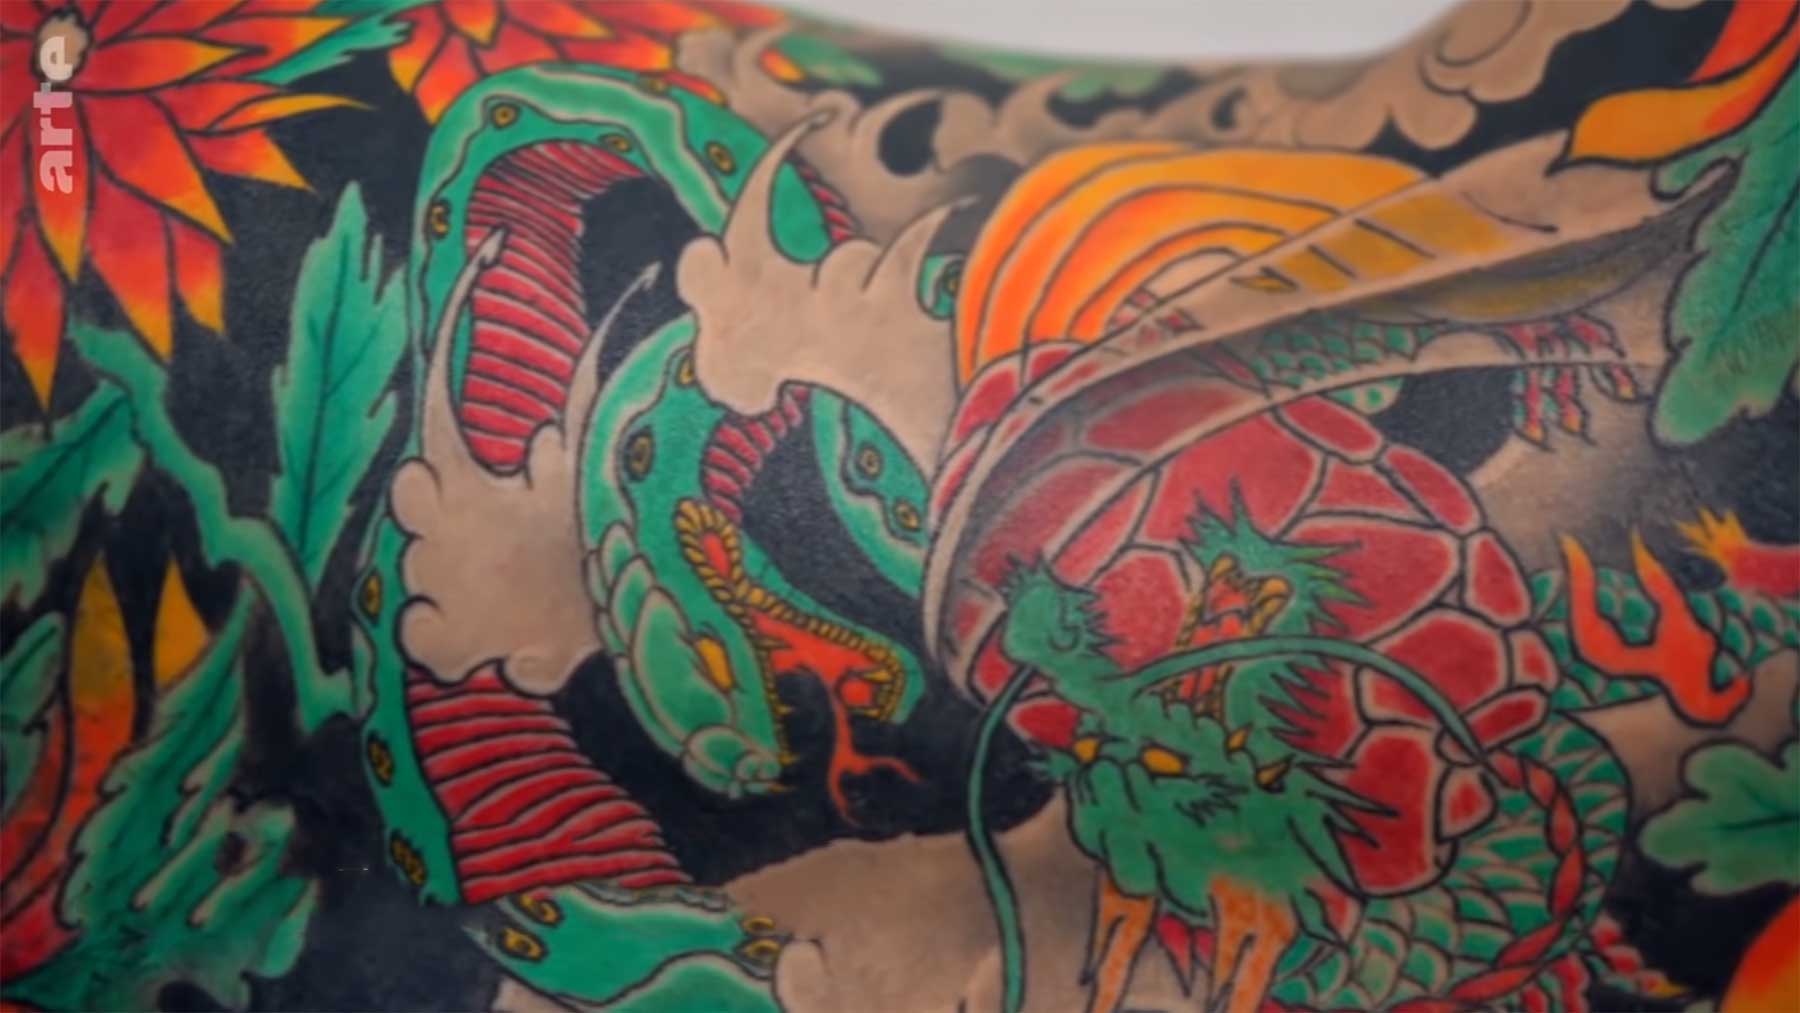 ARTE-Kurzdoku über die Tattoo-Kultur in Japan